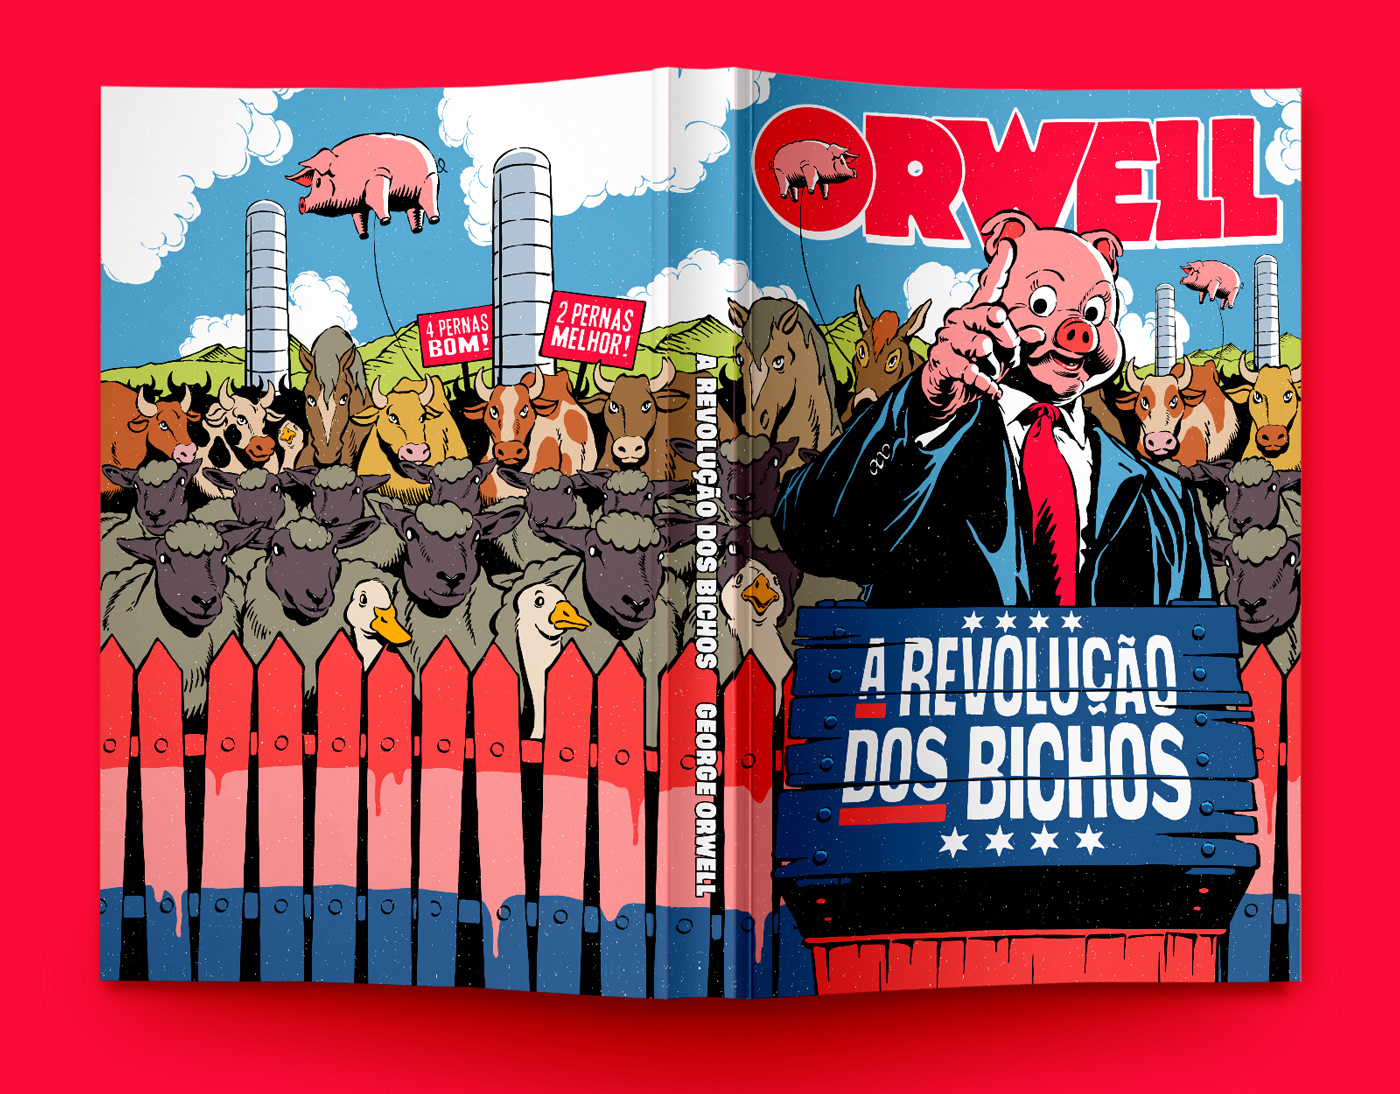 Animal Farm Dystopia George Orwell Orwell animals Donald Trump Maga make america great again pink floyd Trump